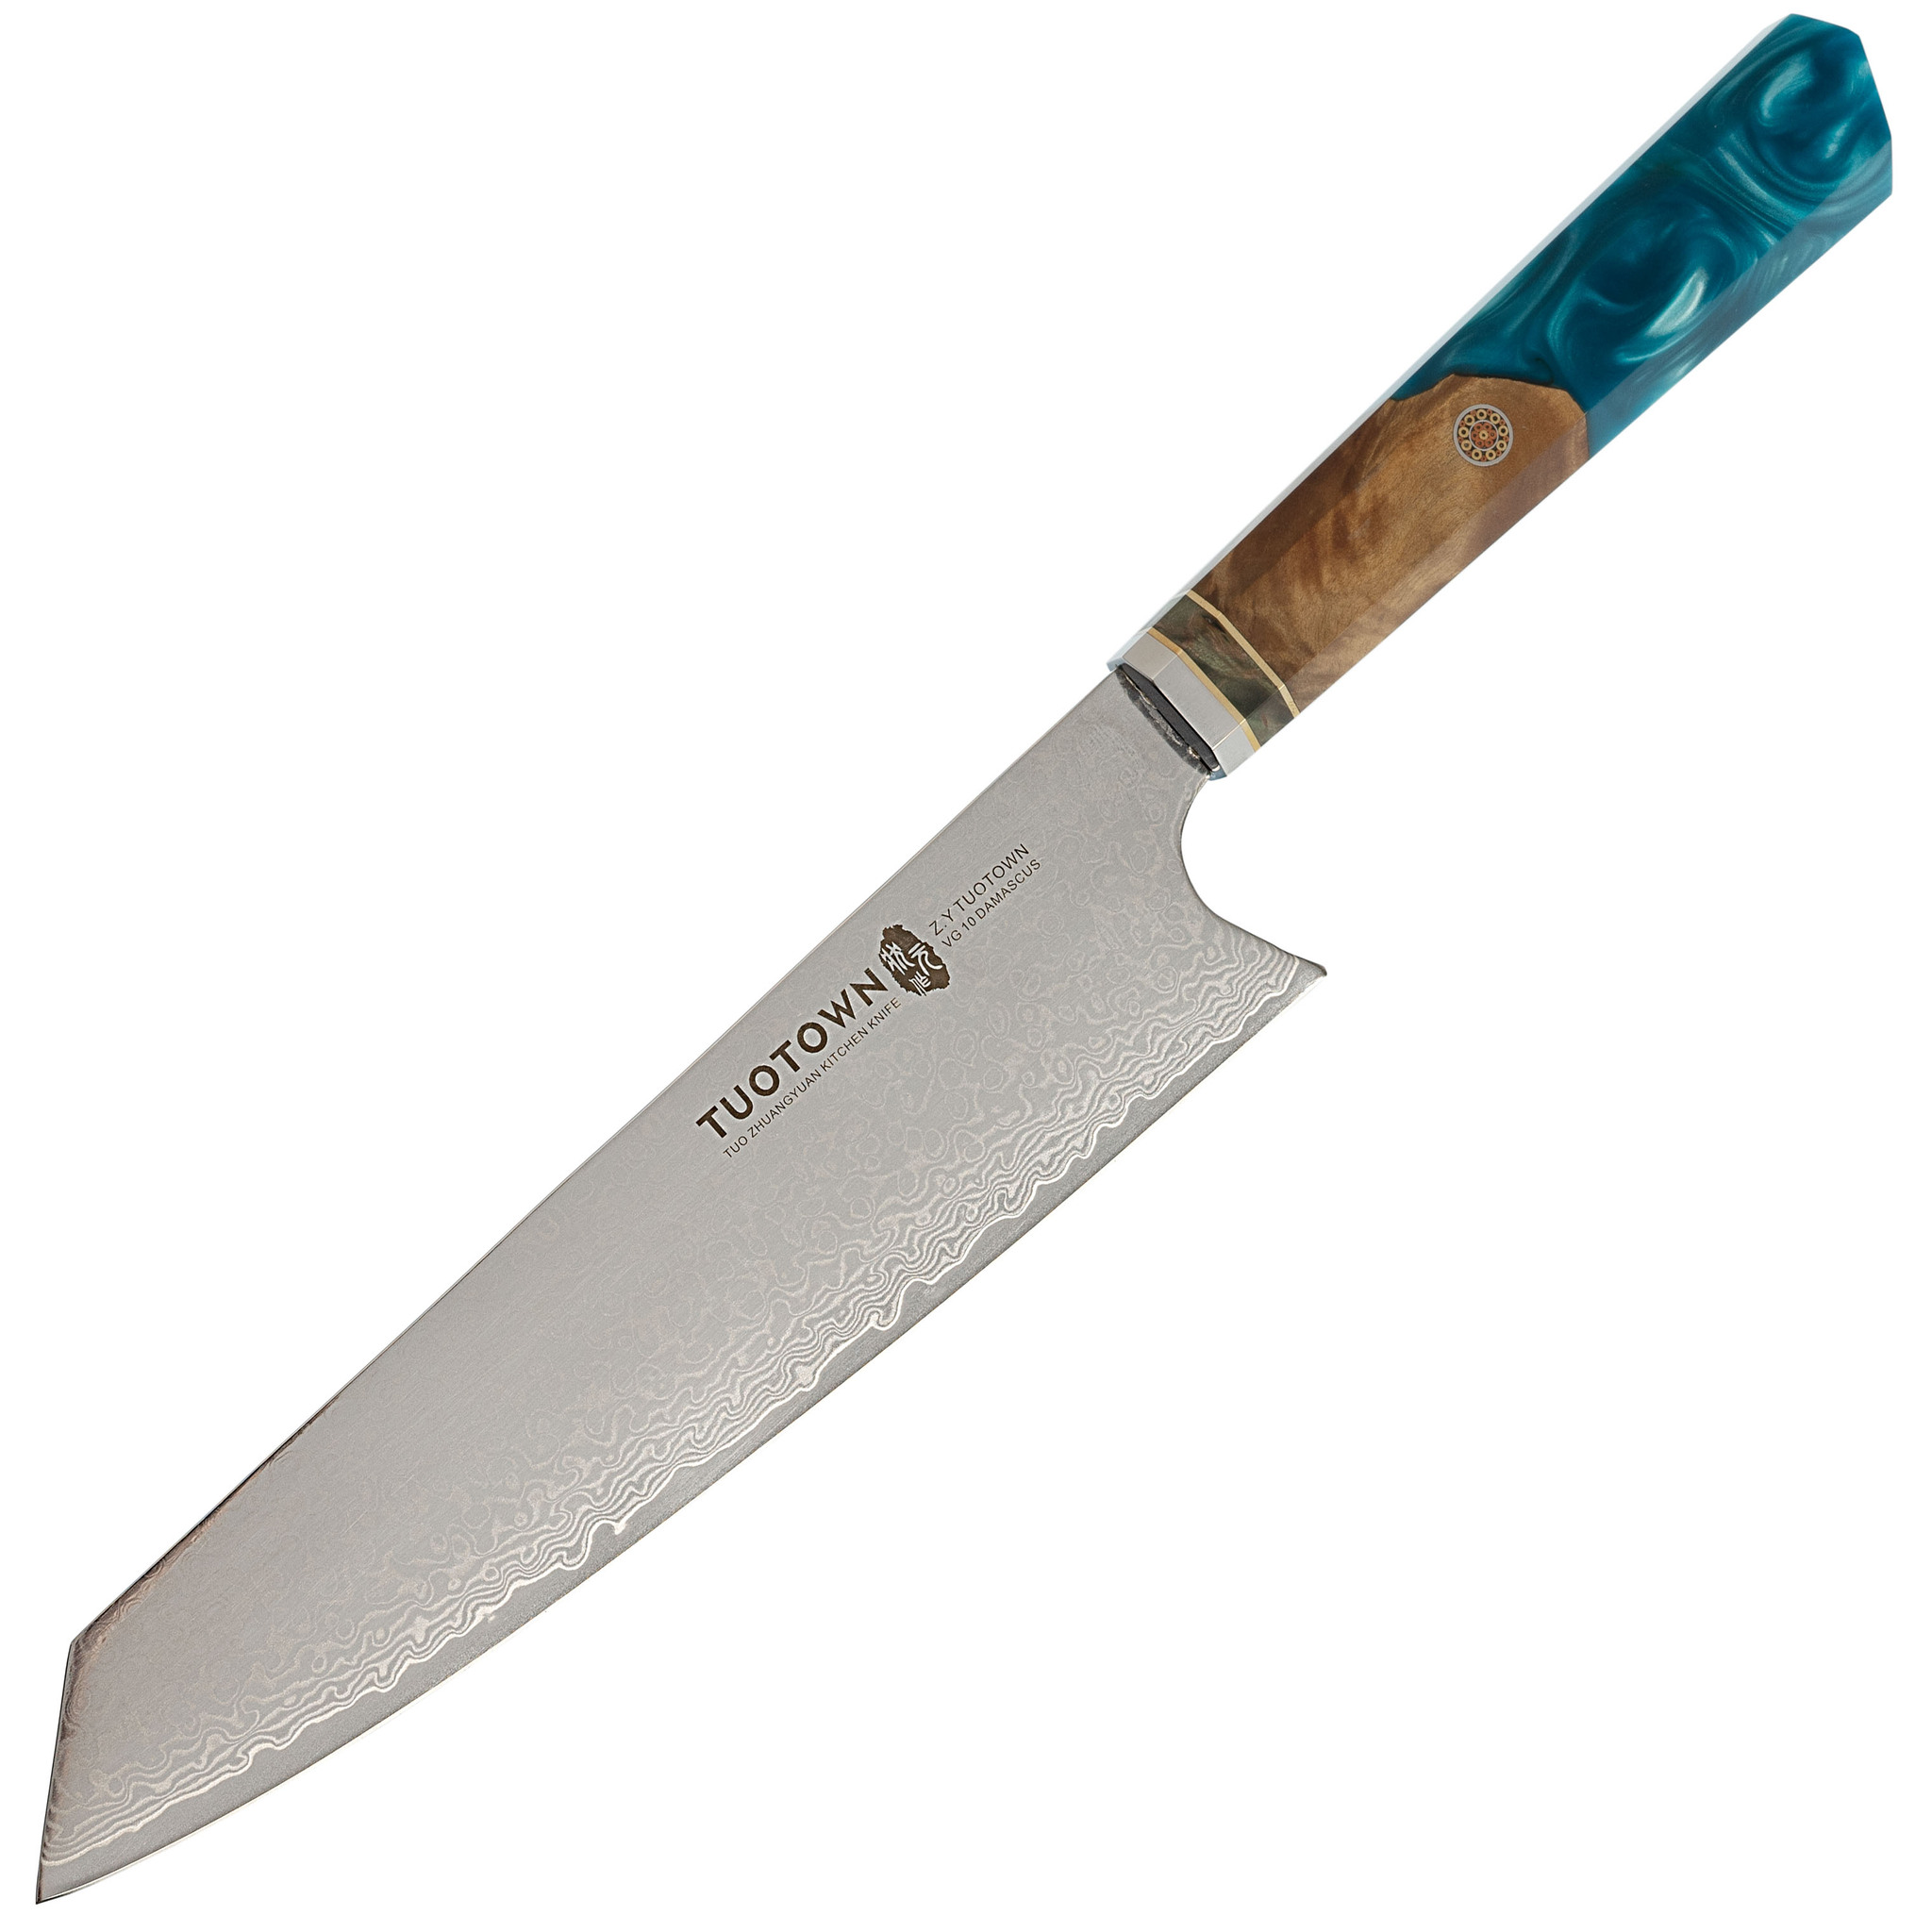 Кухонный нож Tuotown, сталь VG-10, рукоять дерево/эпоксидка